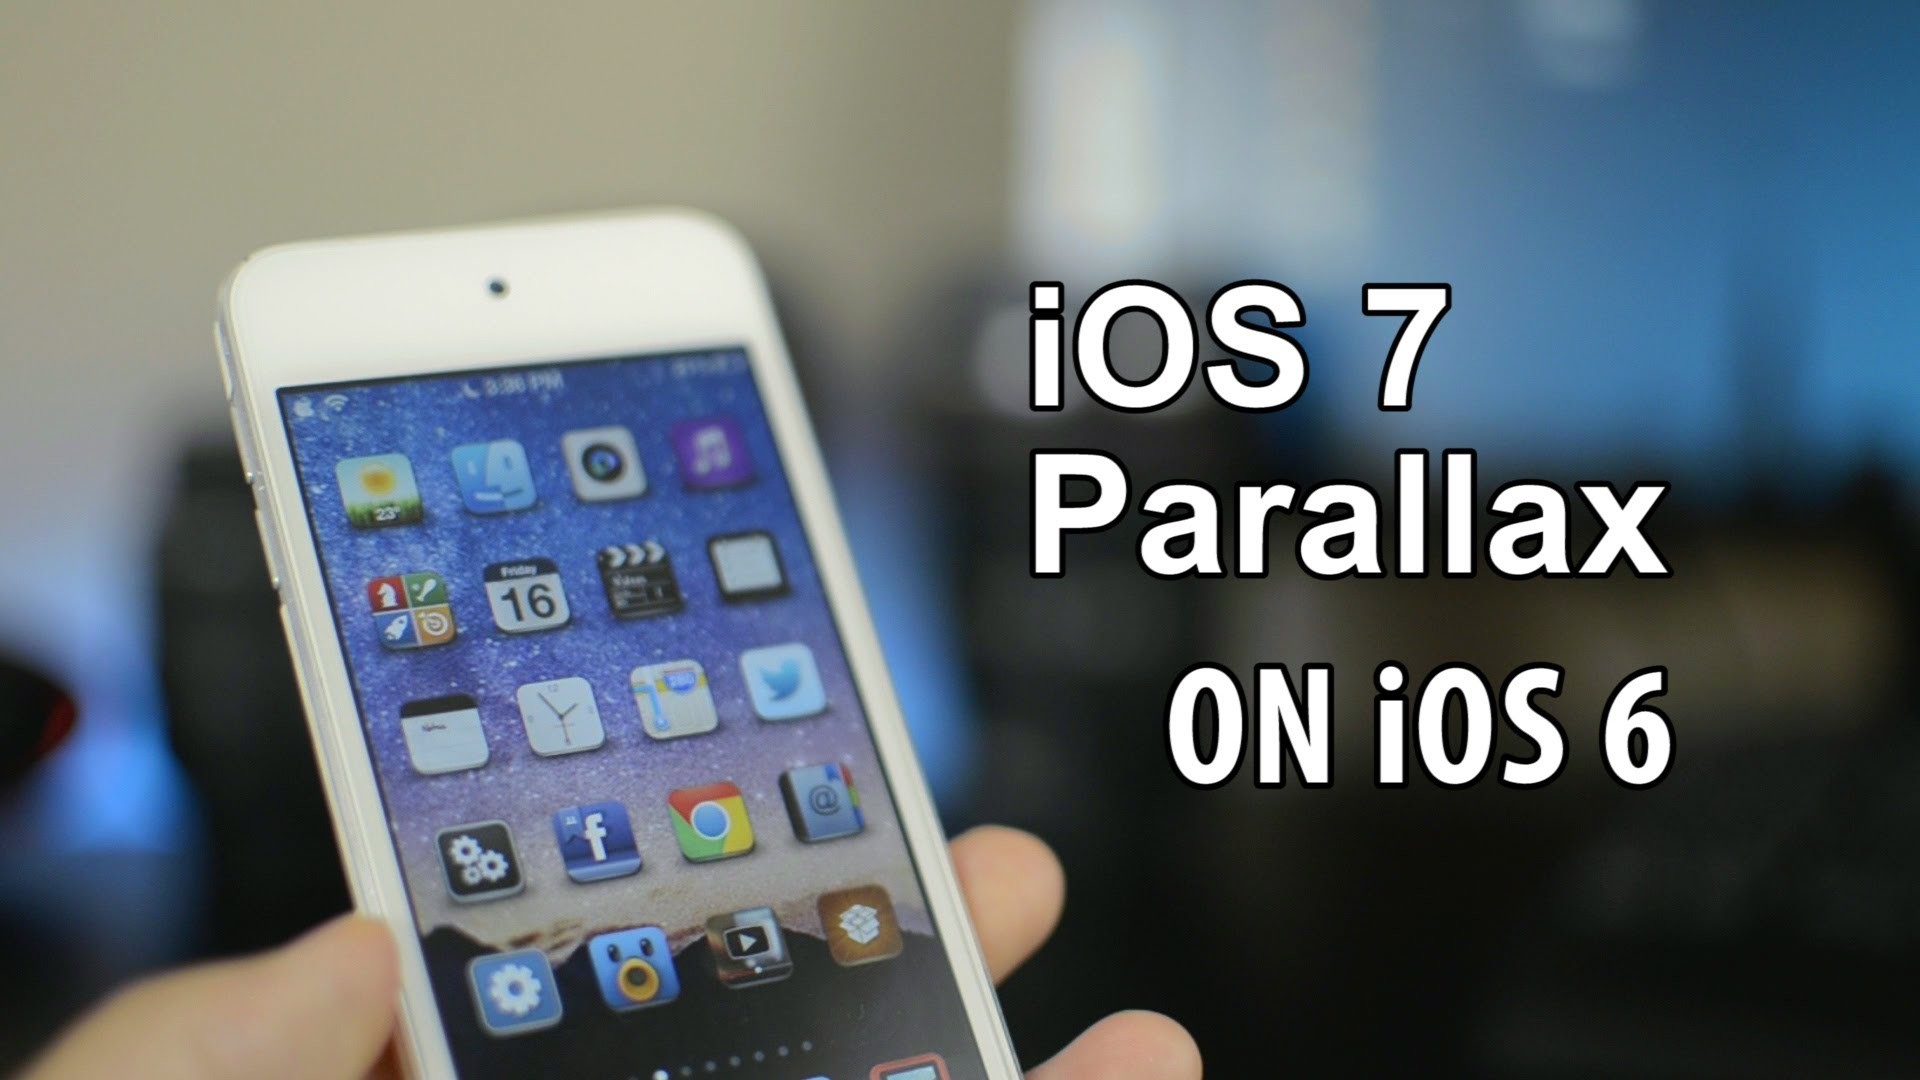 1920x1080 Get iOS 7 Parallax 3D Wallpaper Effect on iOS 6 - Cydia Tweaks - YouTube